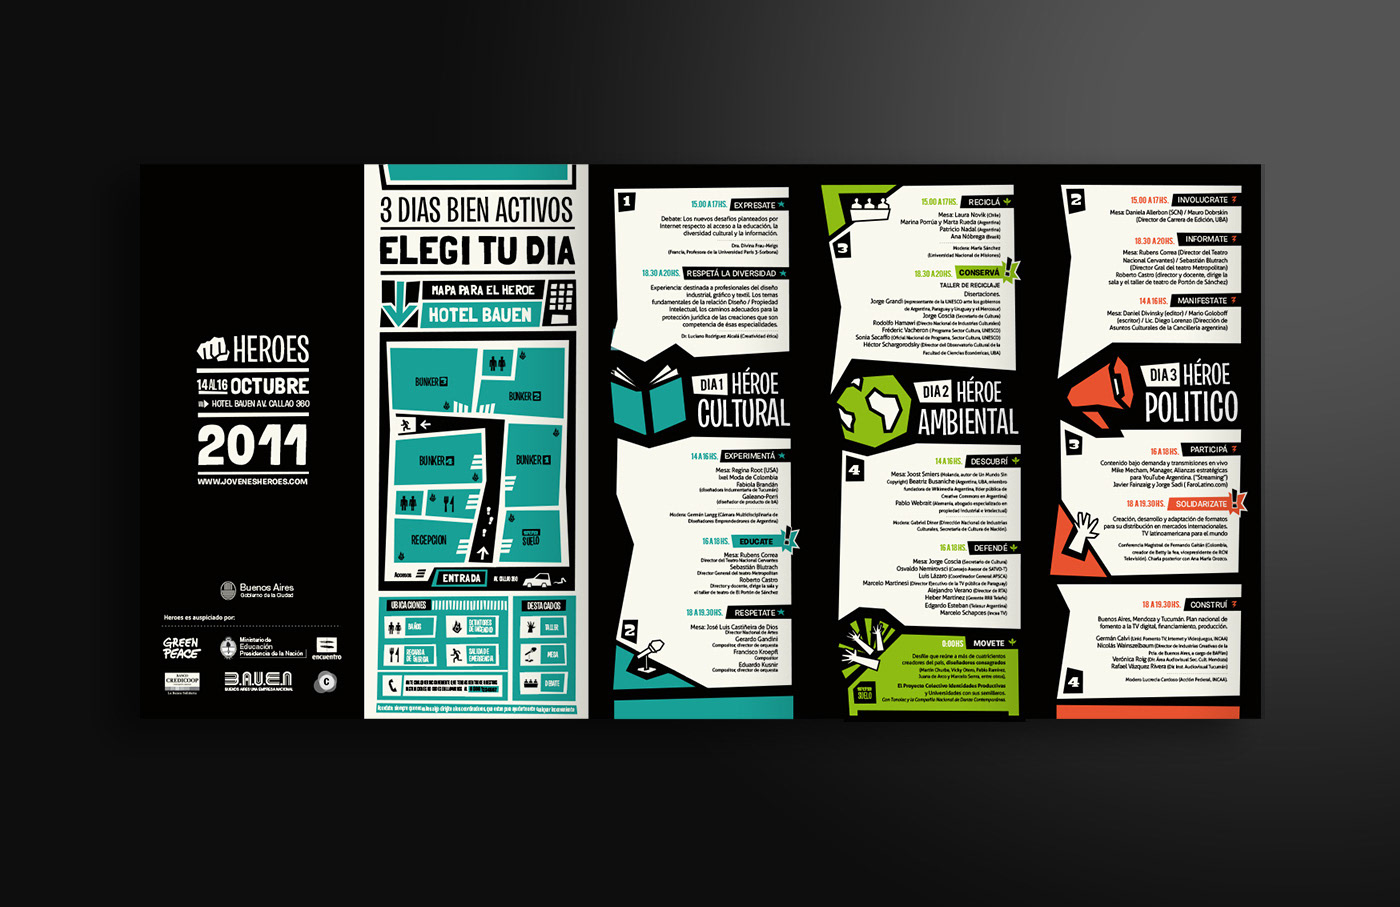 heroes mundo encuentro folleto tipografia action politics social impact Sustainability youth